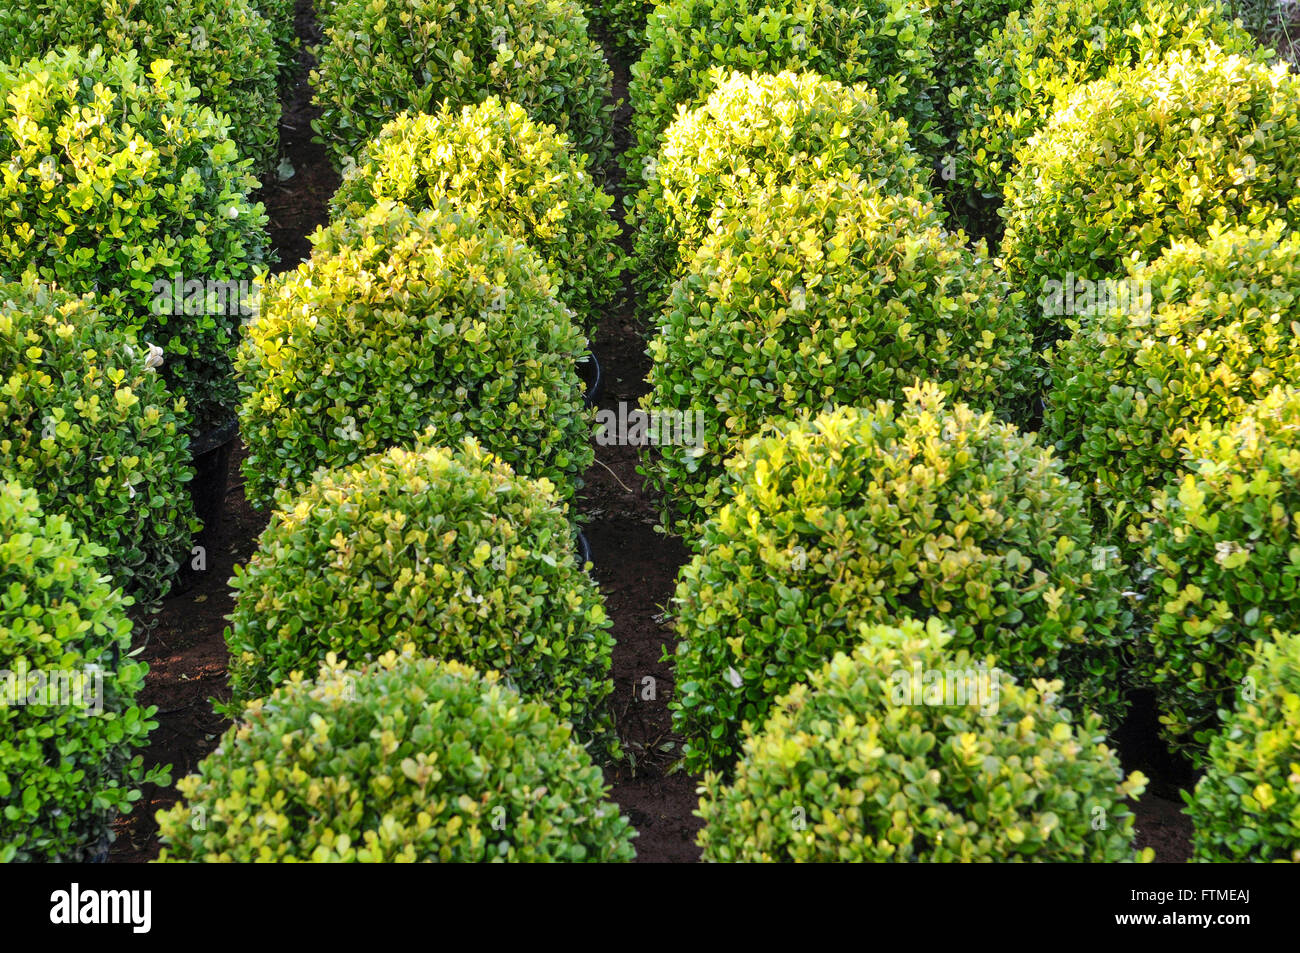 Boxwood - Buxus sempervirens - ornamental plant Stock Photo